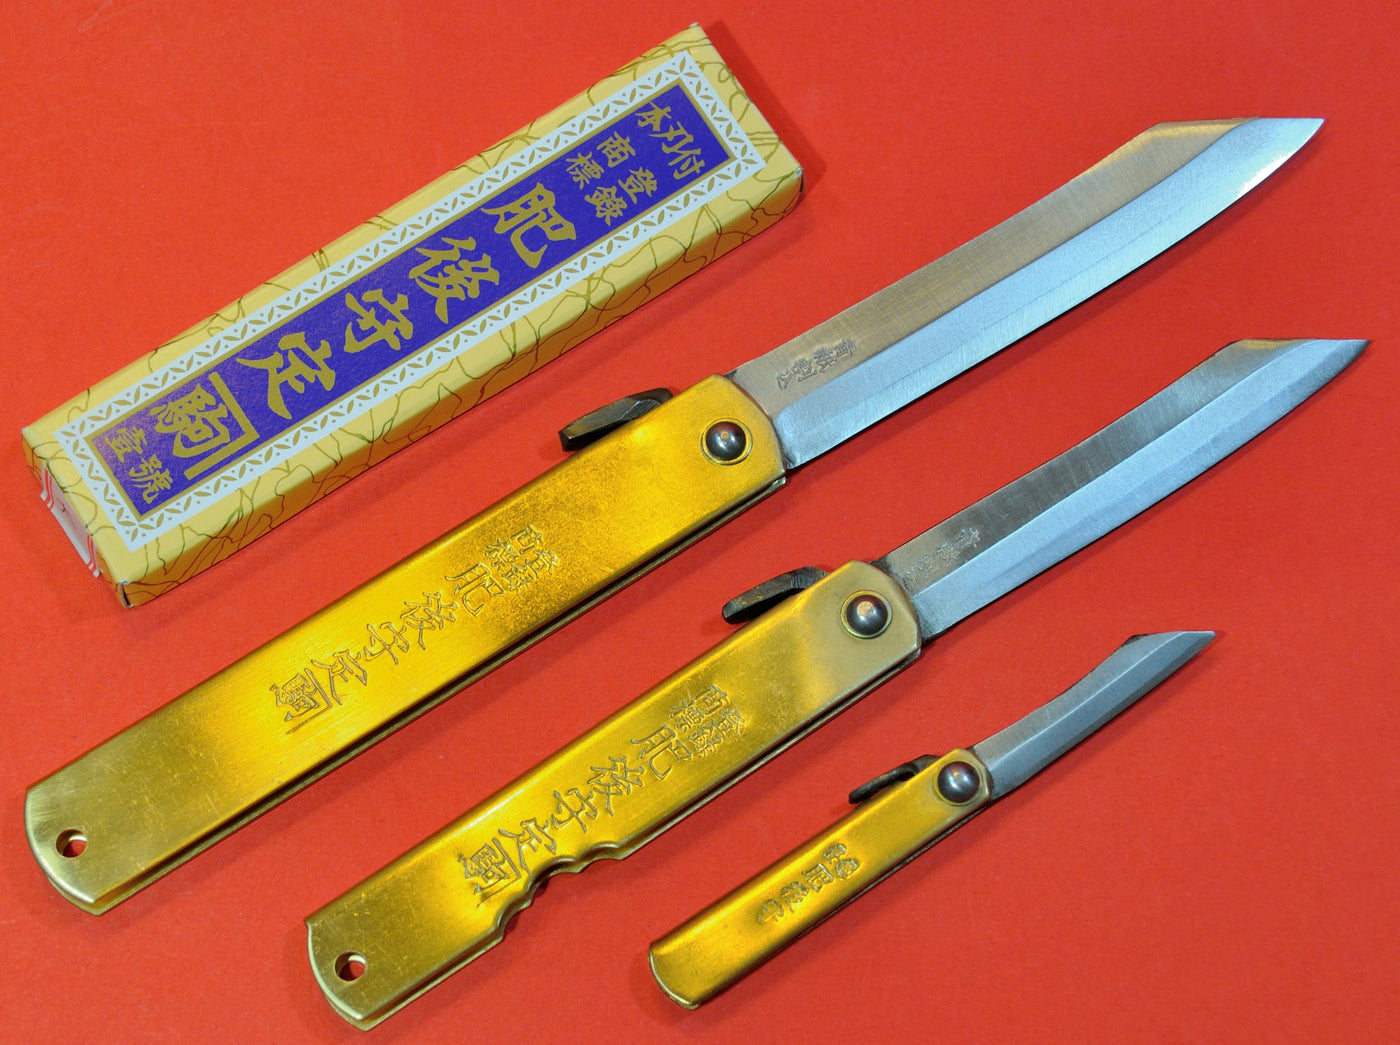 higonokami, navaja japonesa, nagao, japan knive, japan messer, couteau